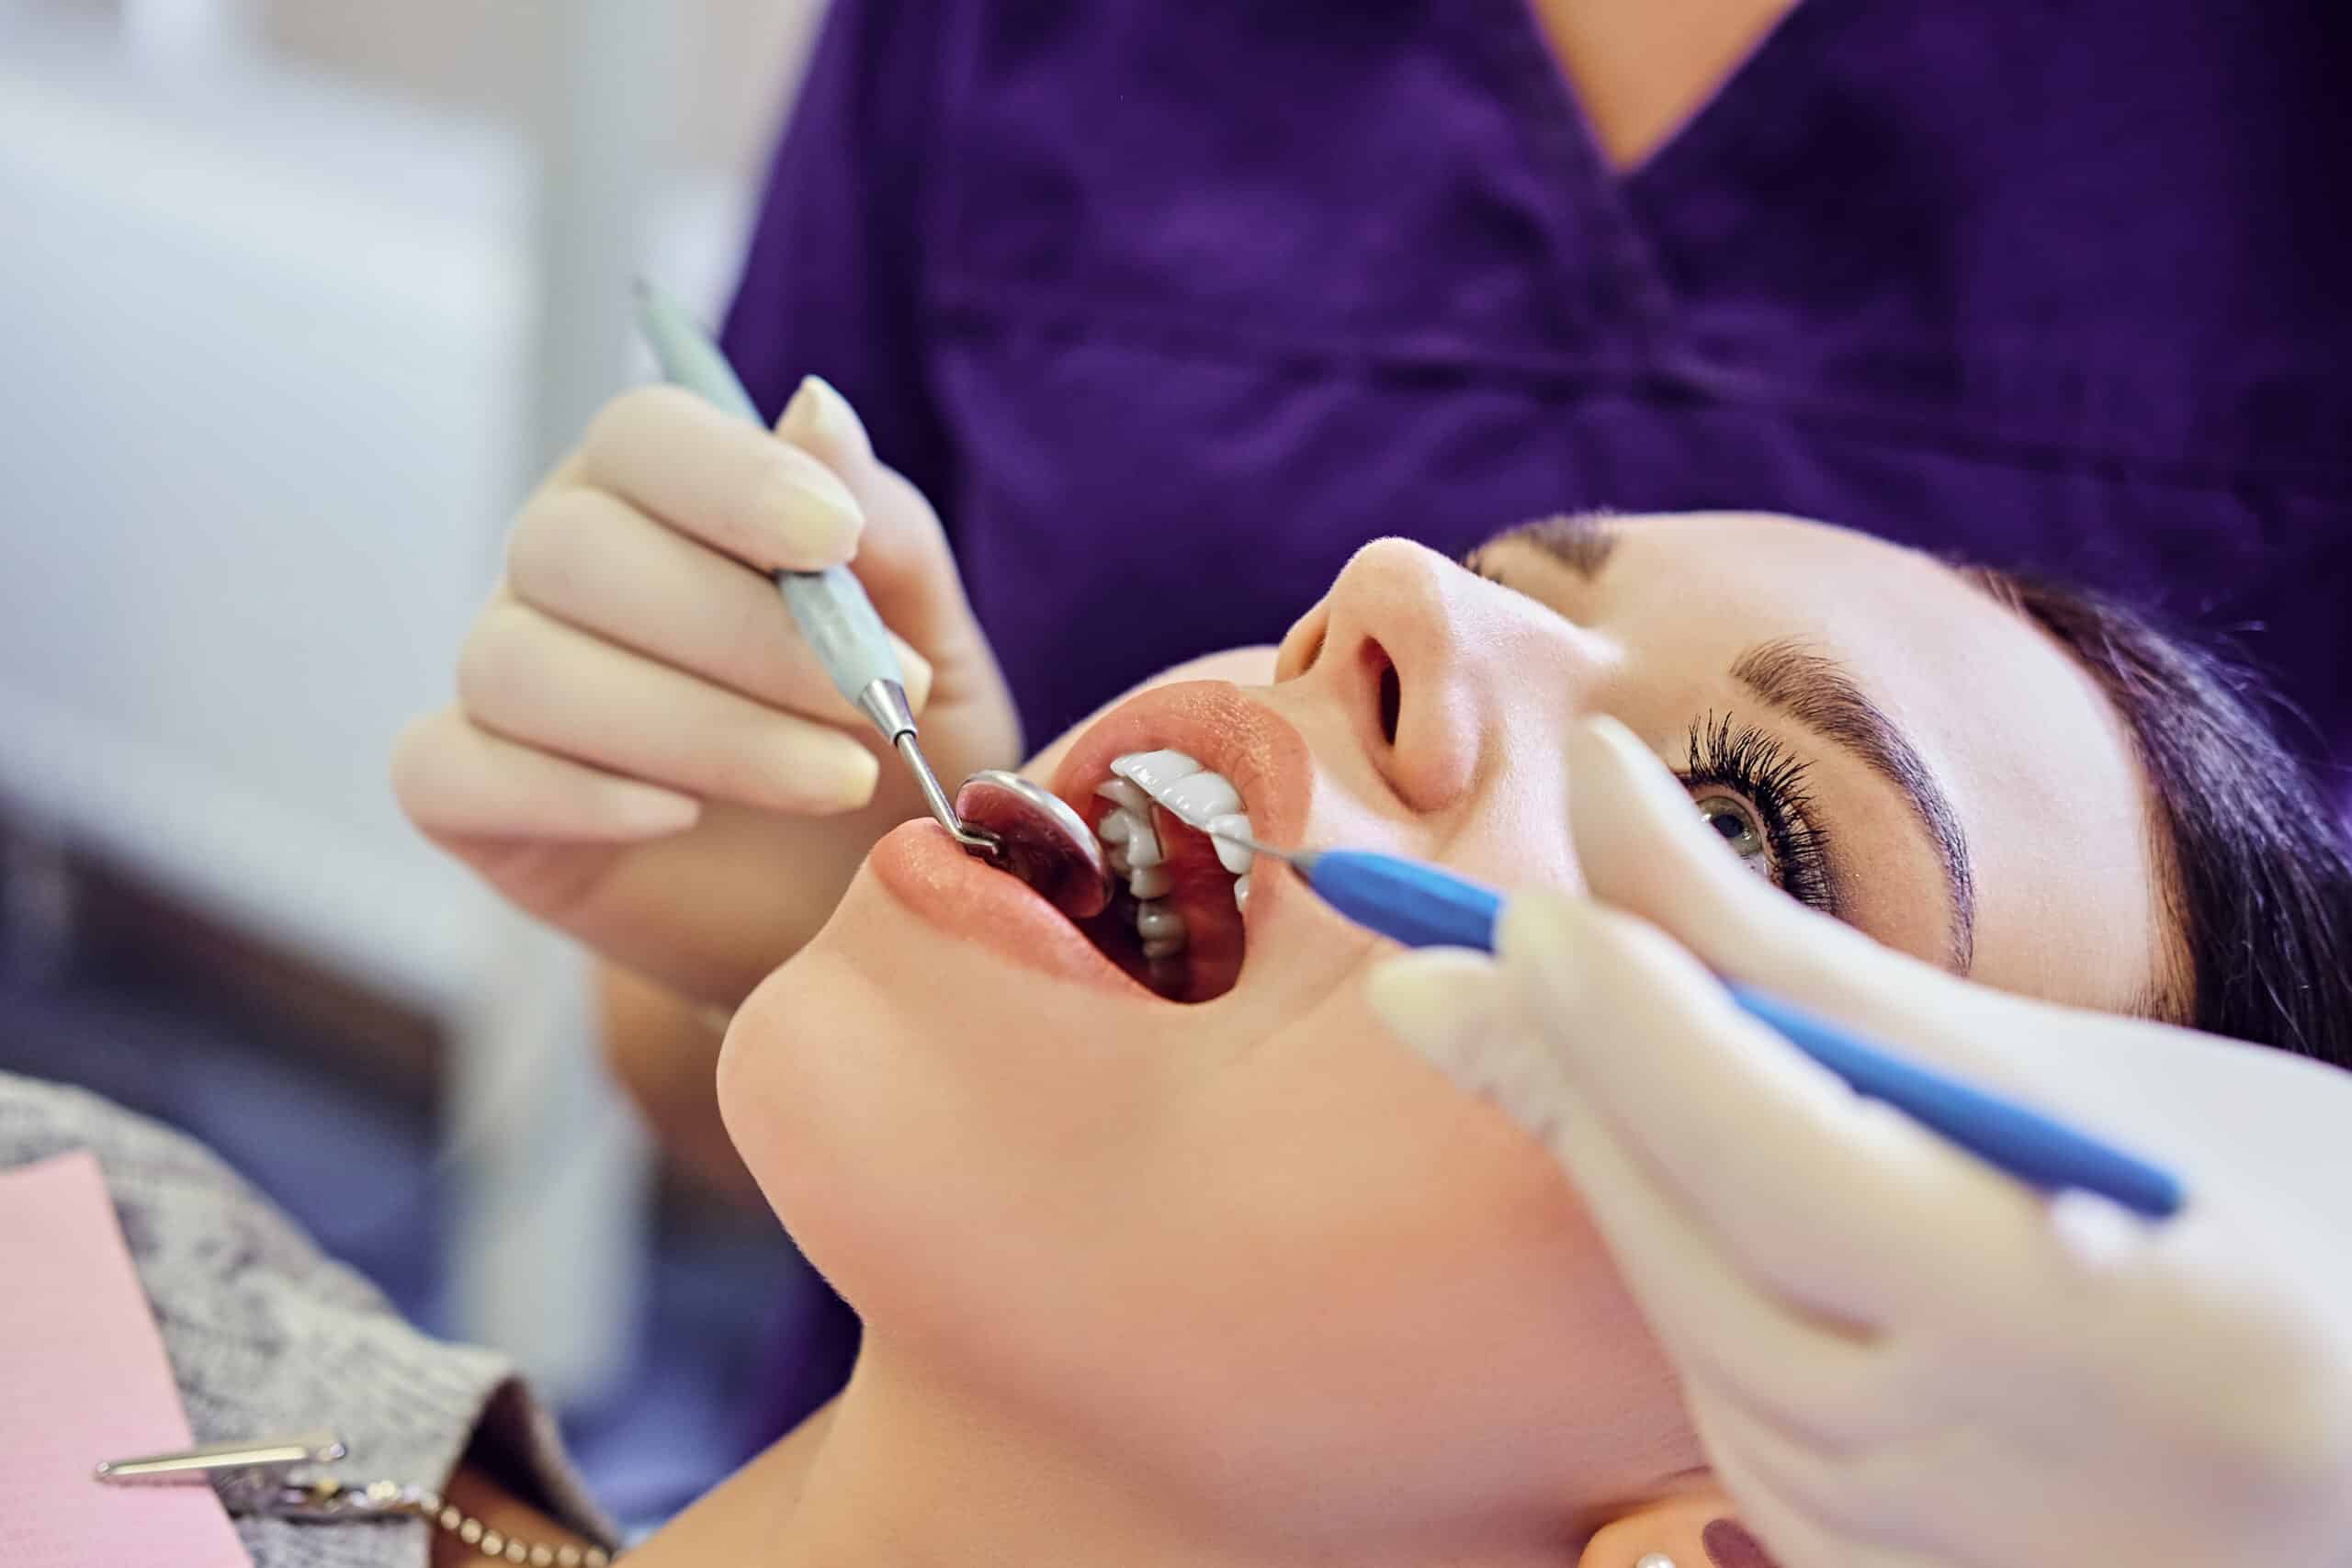 Dentist examining female’s teeth in dentistry.